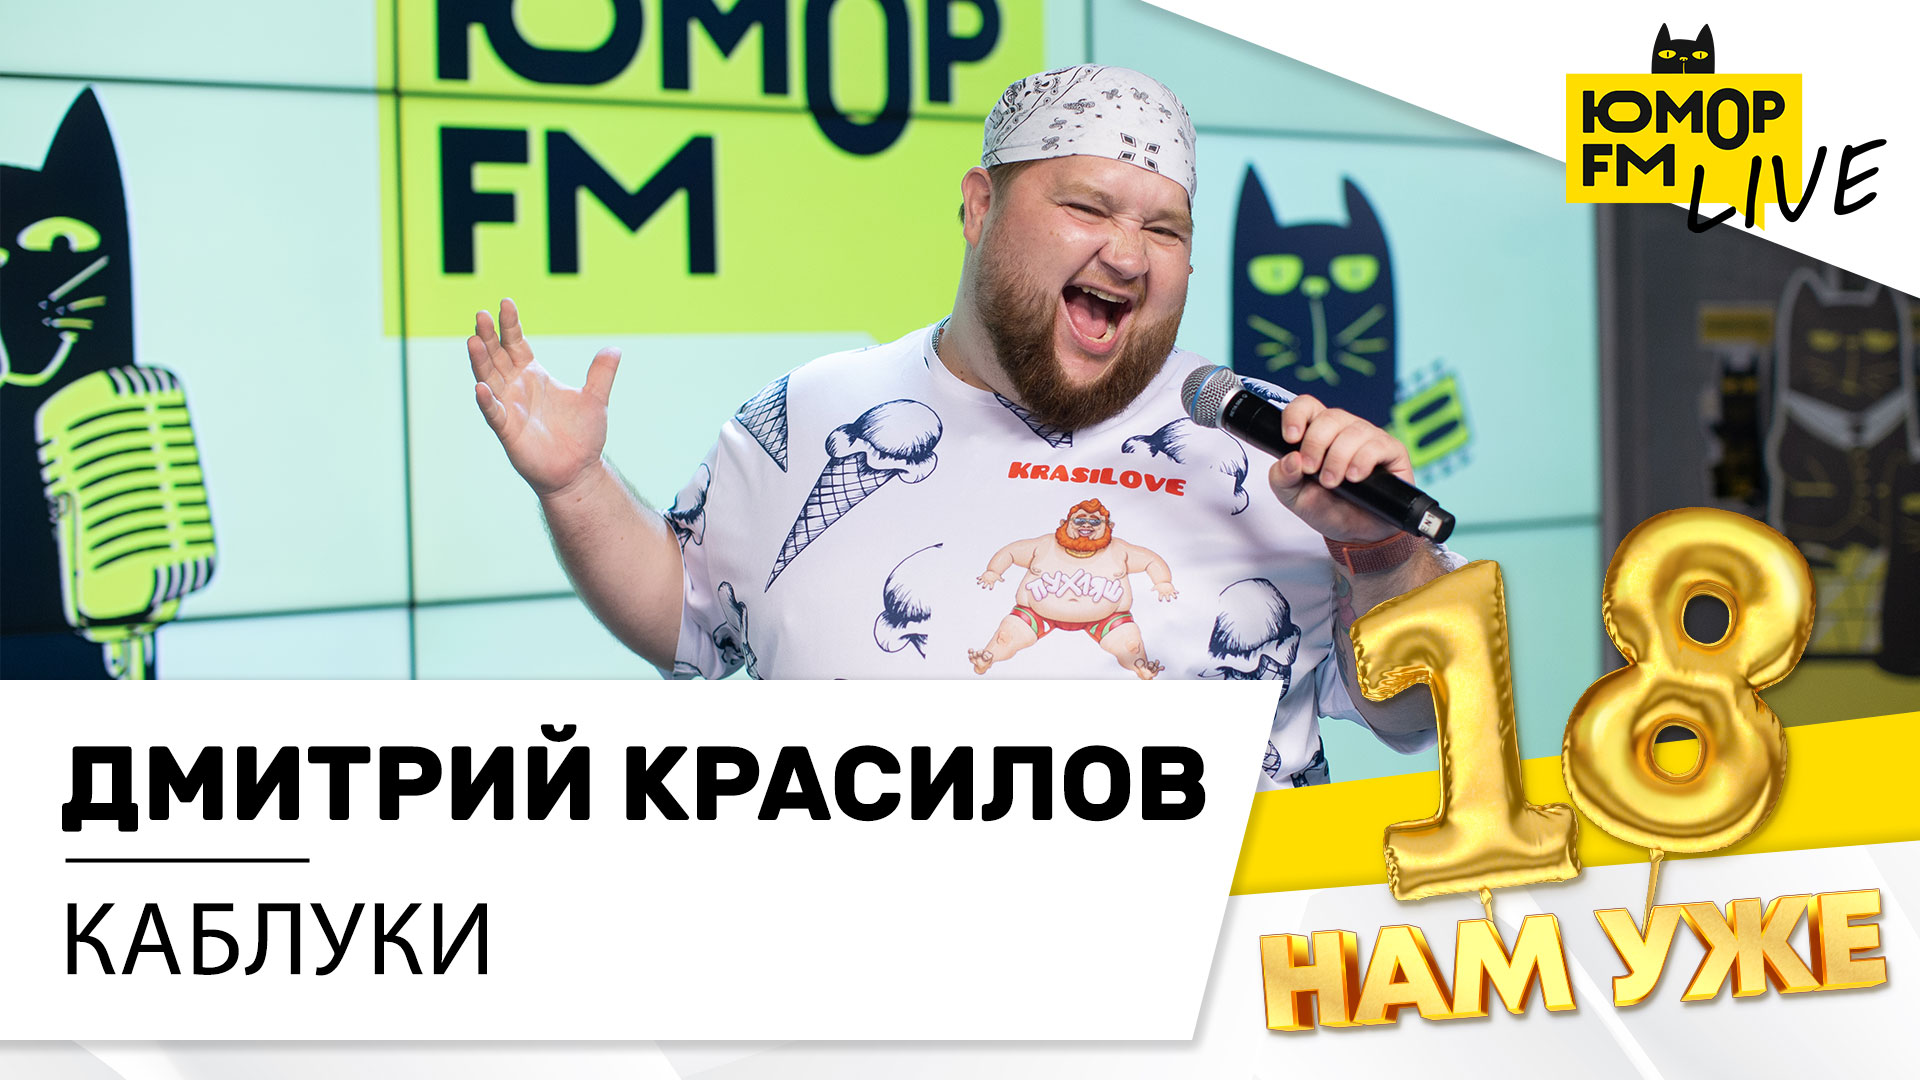 Дмитрий Красилов - Каблуки (LIVE) / Марафон Юмор FM «18 нам уже»